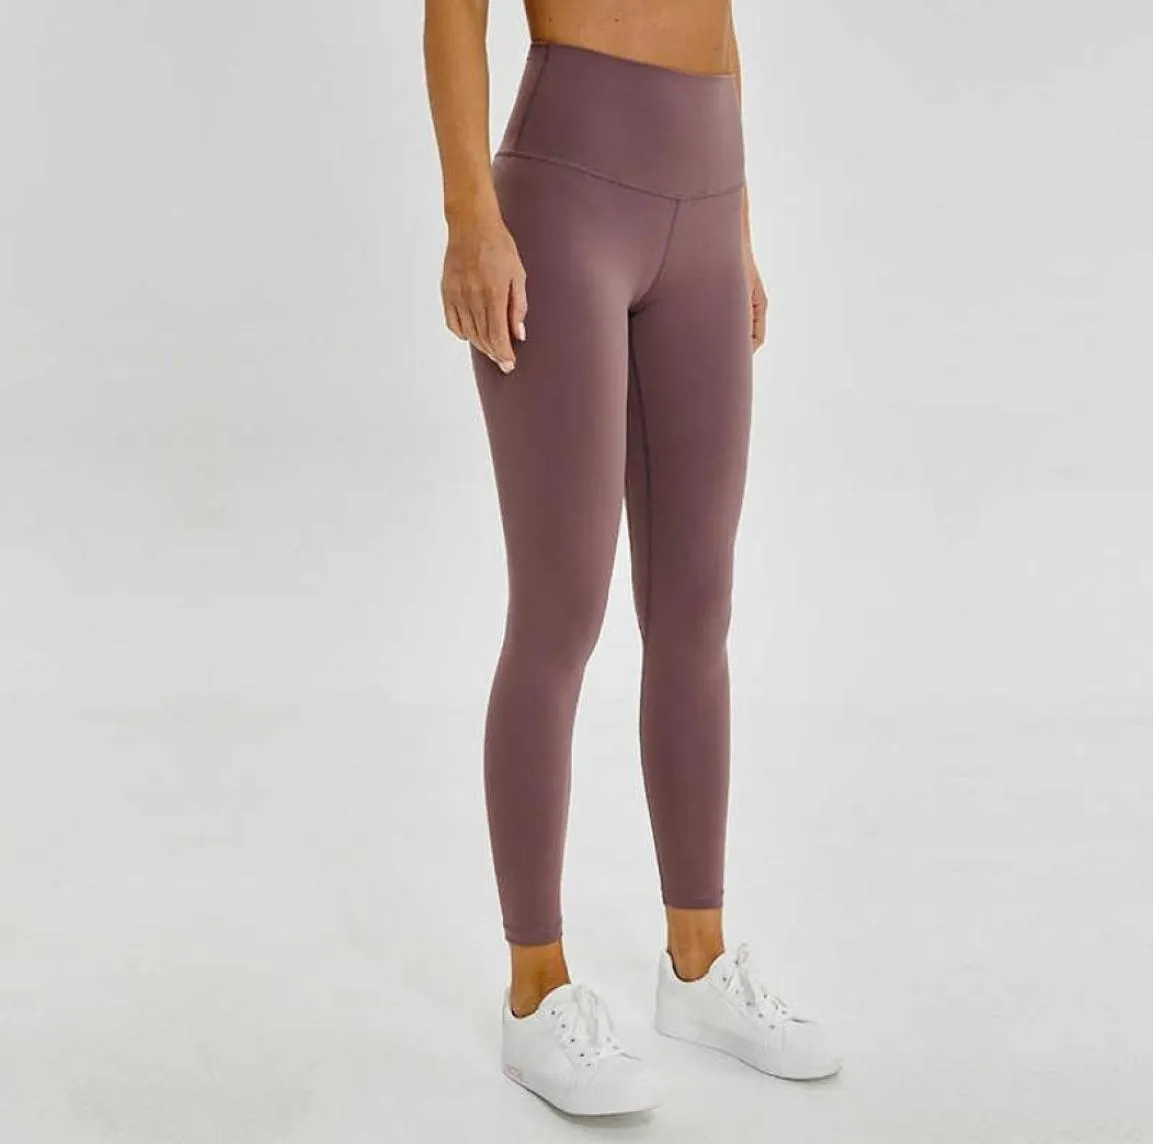 Material nu calças de yoga femininas l85 cor sólida esportes ginásio wear leggings cintura alta elástica fitness senhora geral collants treino8312499